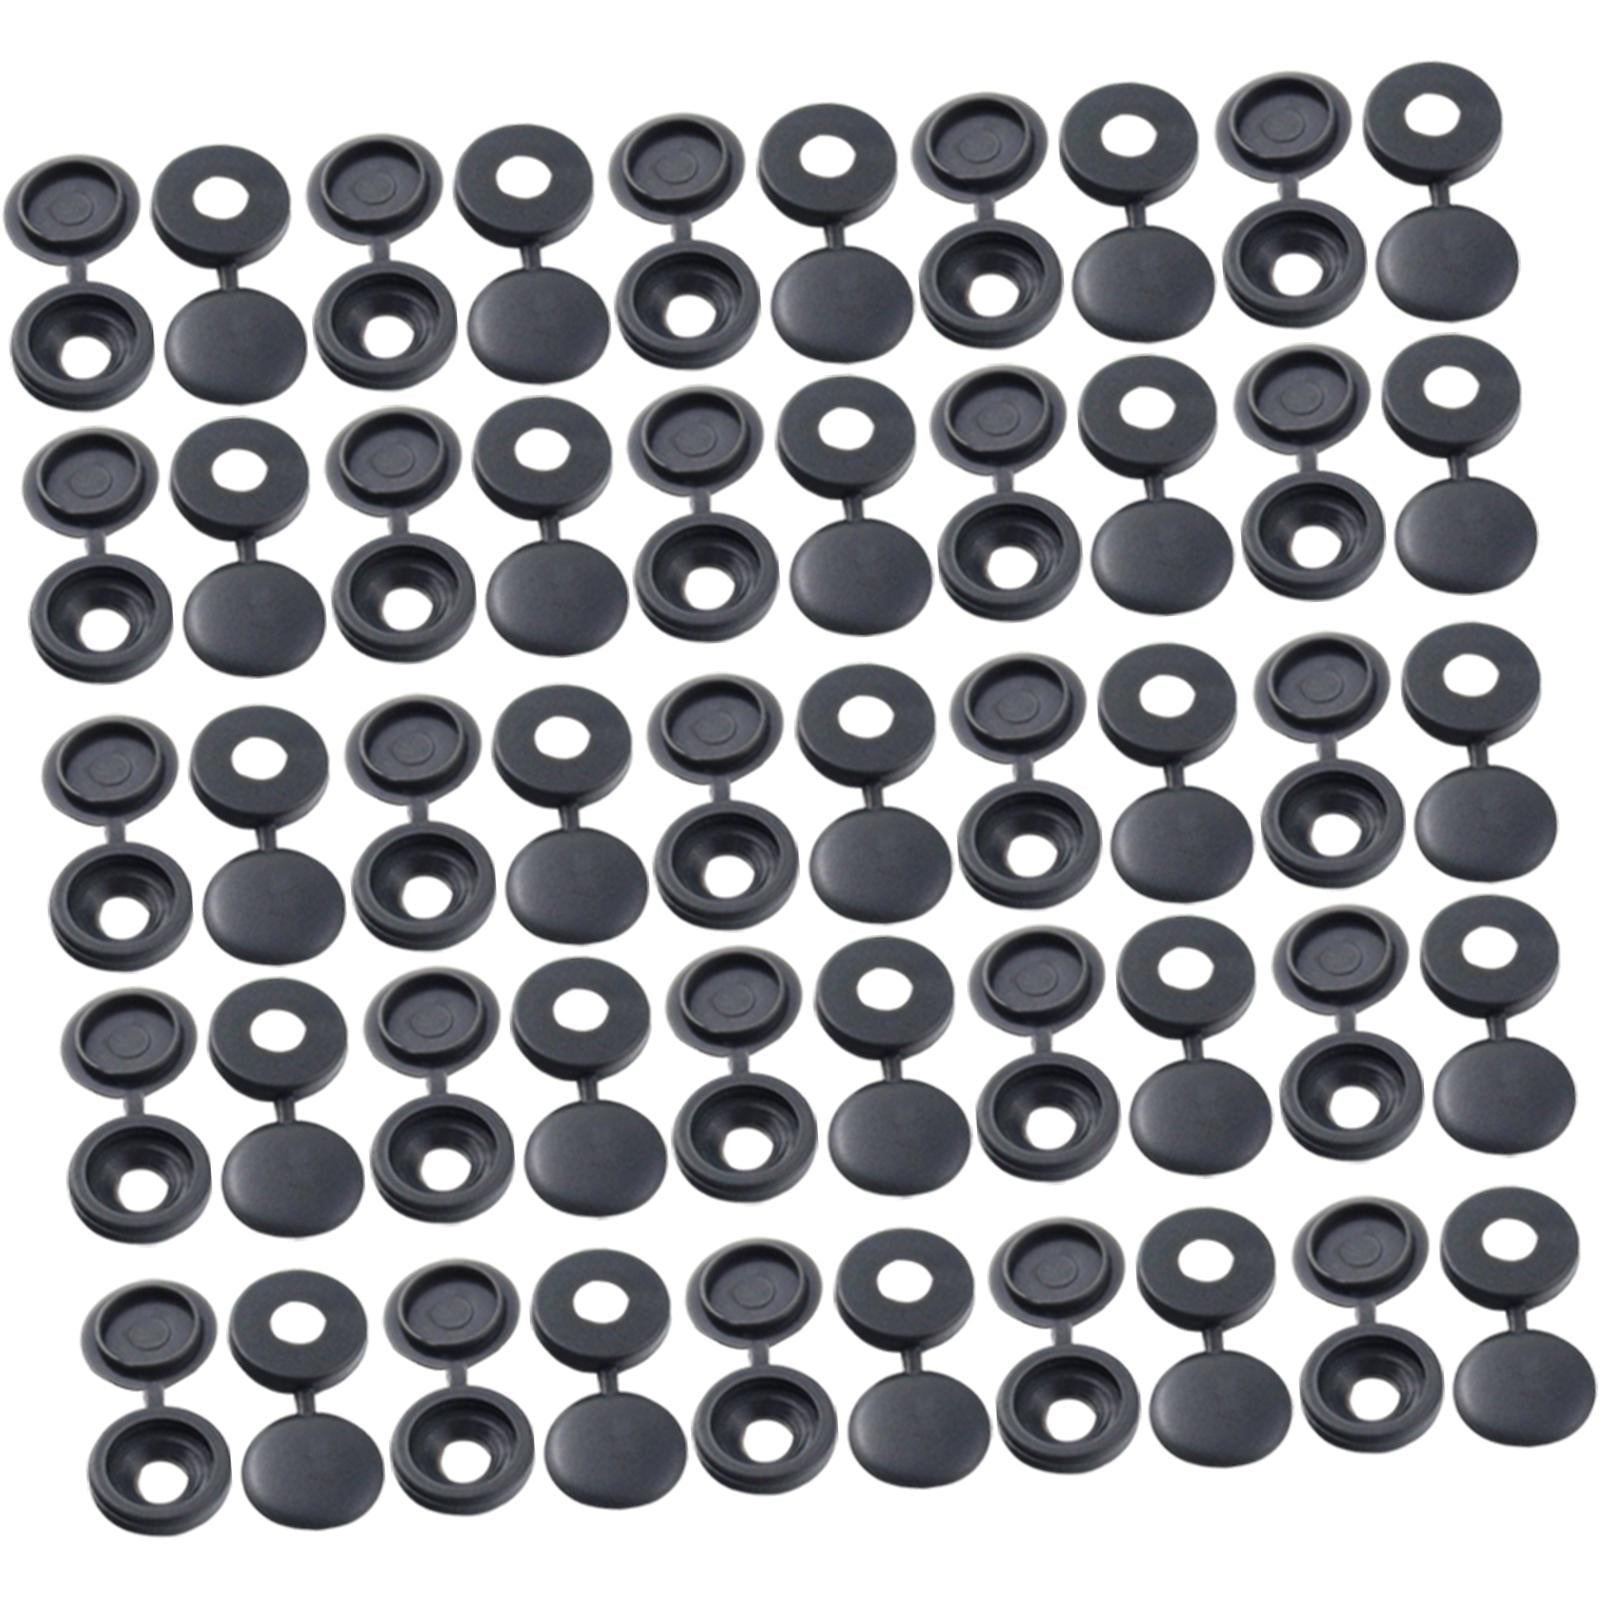 100 Pieces Screw Covers, Practical Screws Caps for Replacement Tools Yard Dark Grey